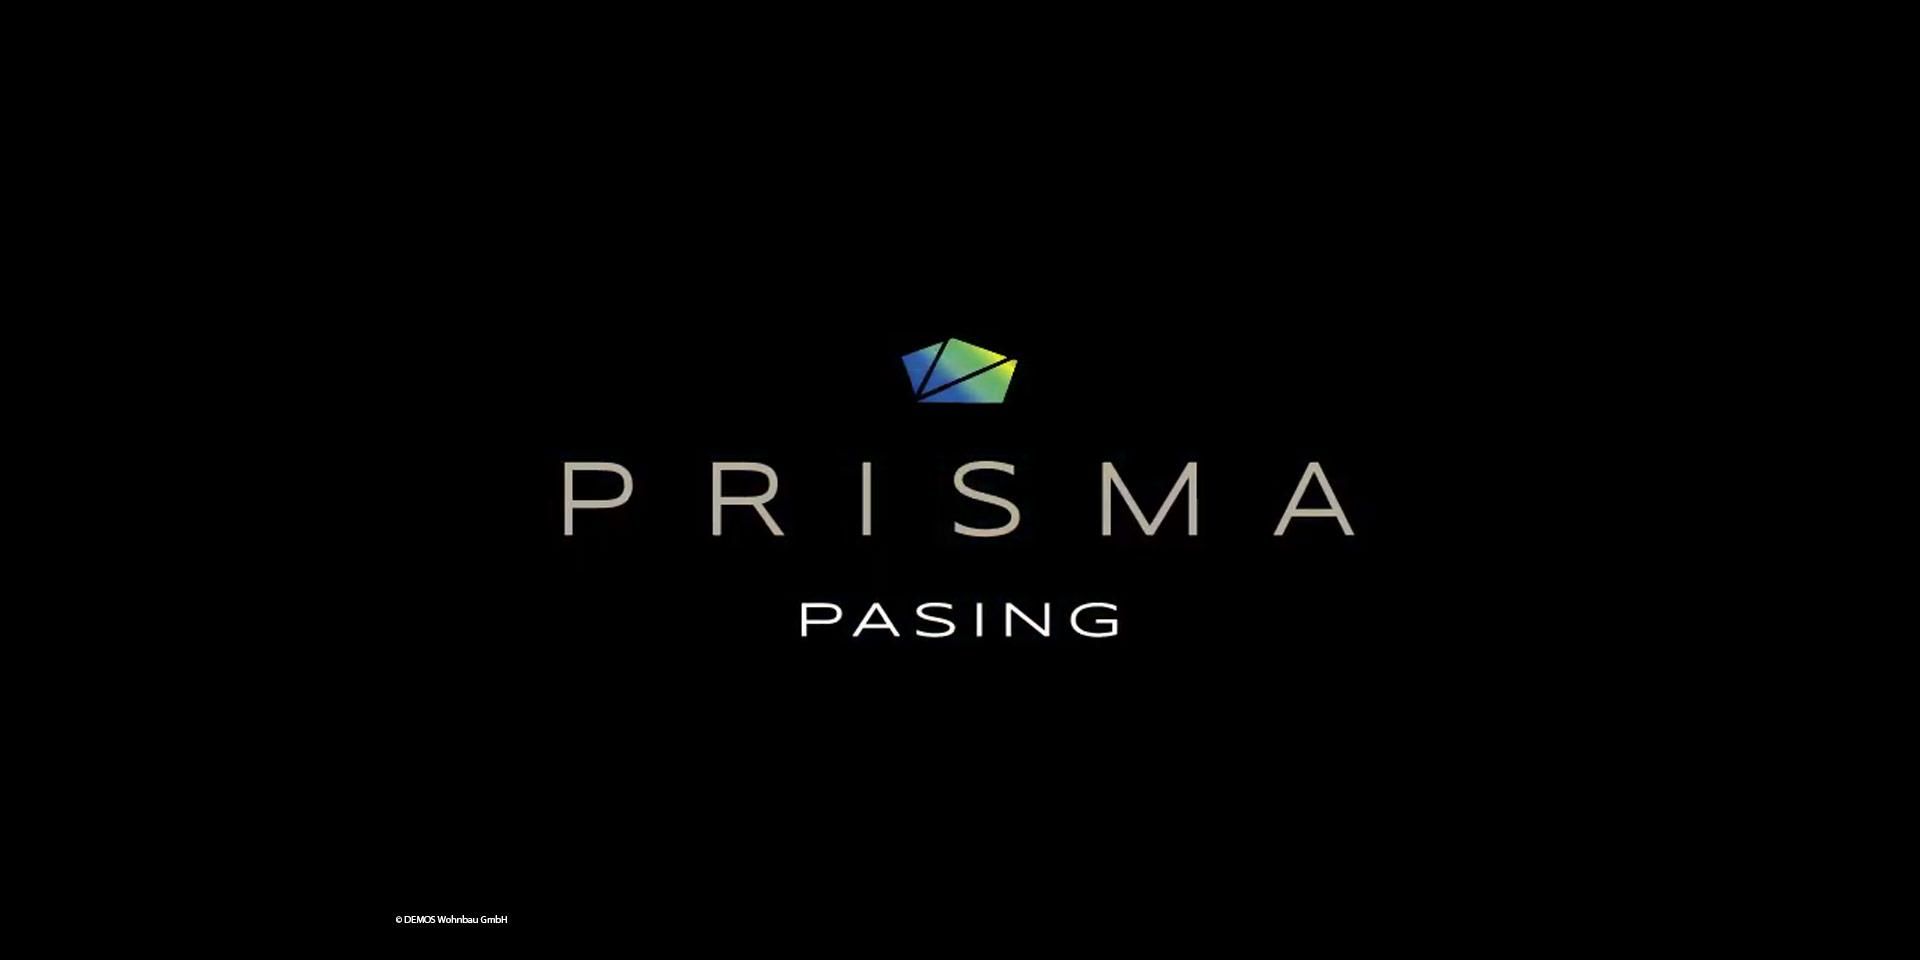 “PRISMA PASING” – video presentation